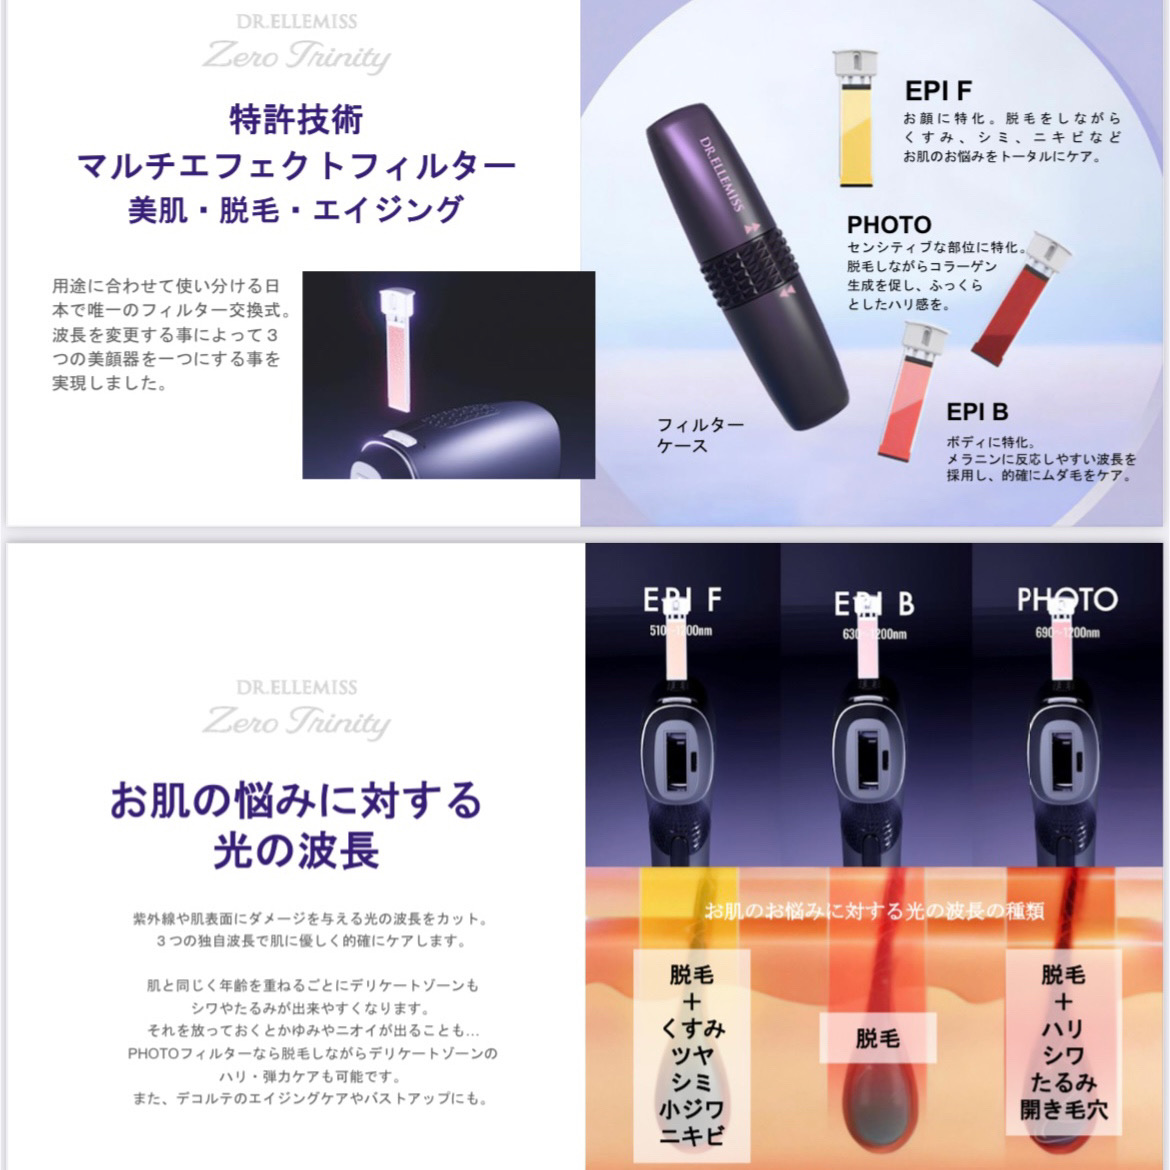 C【DR.ELLEMISS Zero Trinity】​ドクターエルミスゼロトリニティ日本初の特許技術！冷却＆レベル自動調整でストレスフリーなムダ毛ケア。1台3役の光美容機器画像